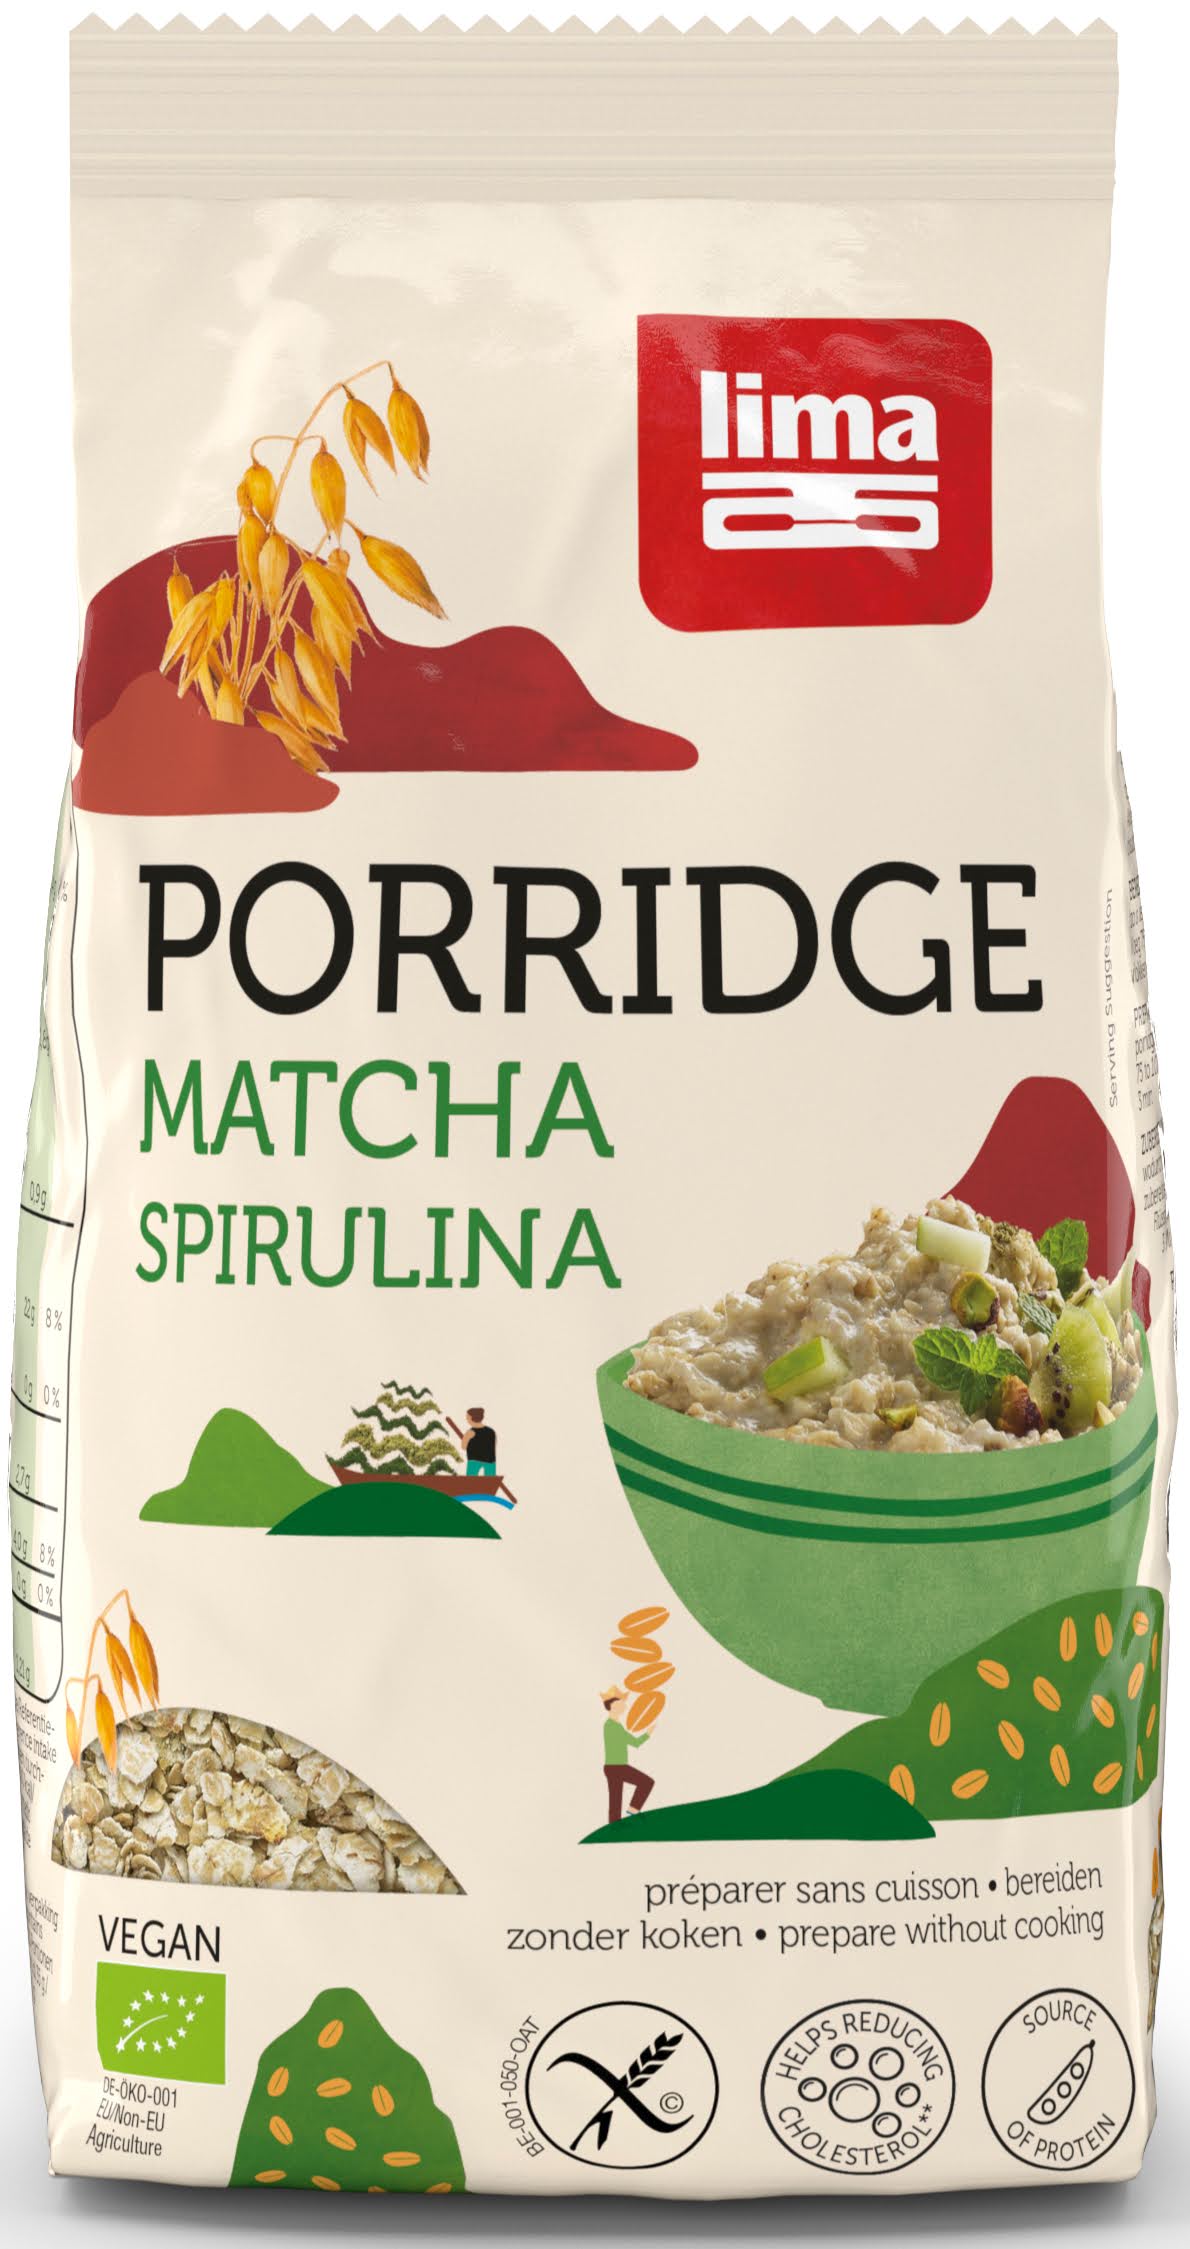 Express Porridge Matcha Spirulina